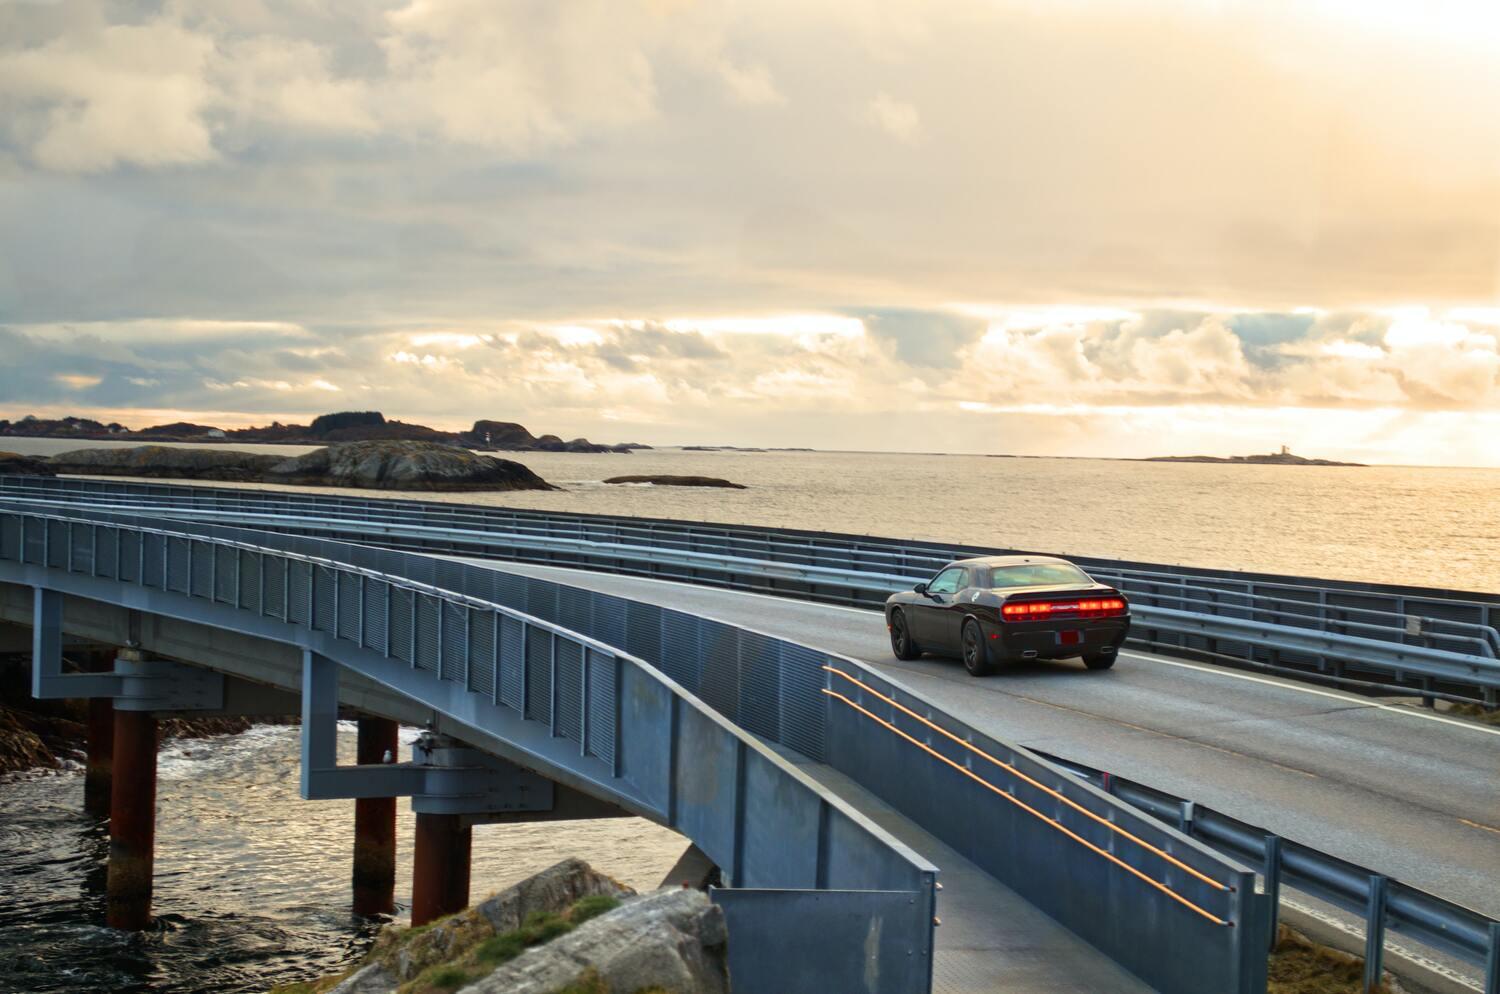 Car going across bridge with ocean backdrop